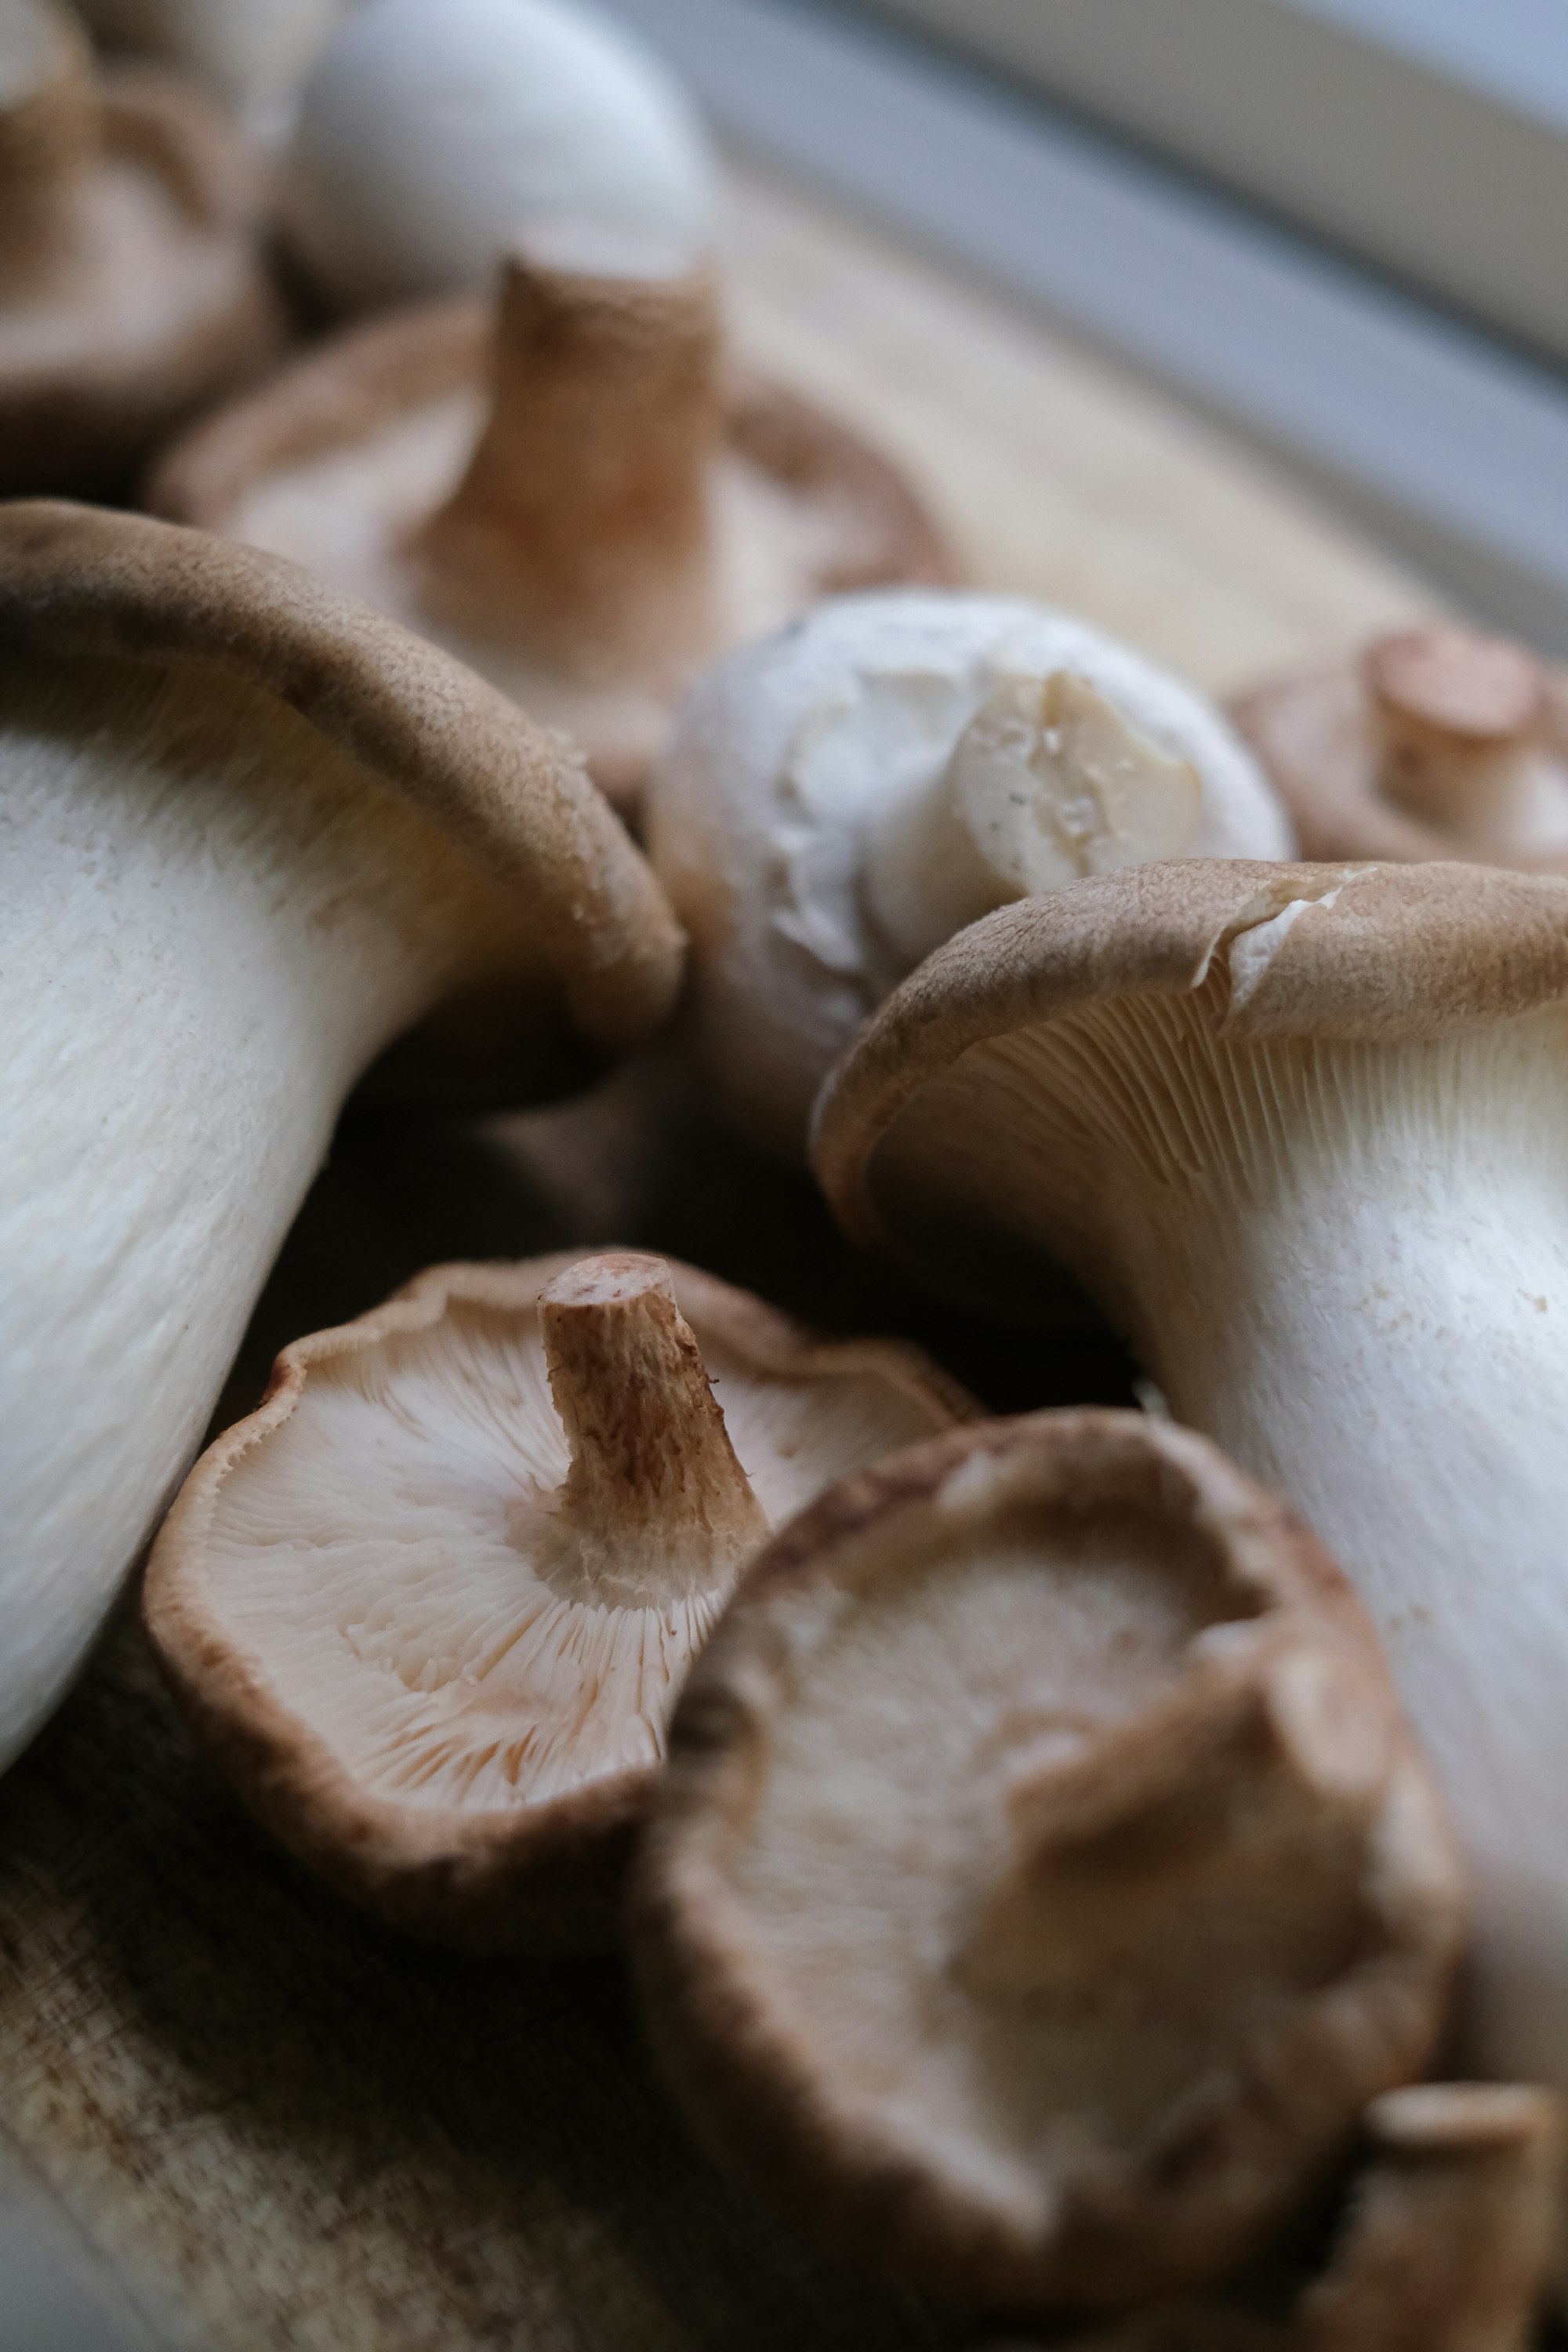 Mushroom Sales: a Recession Indicator